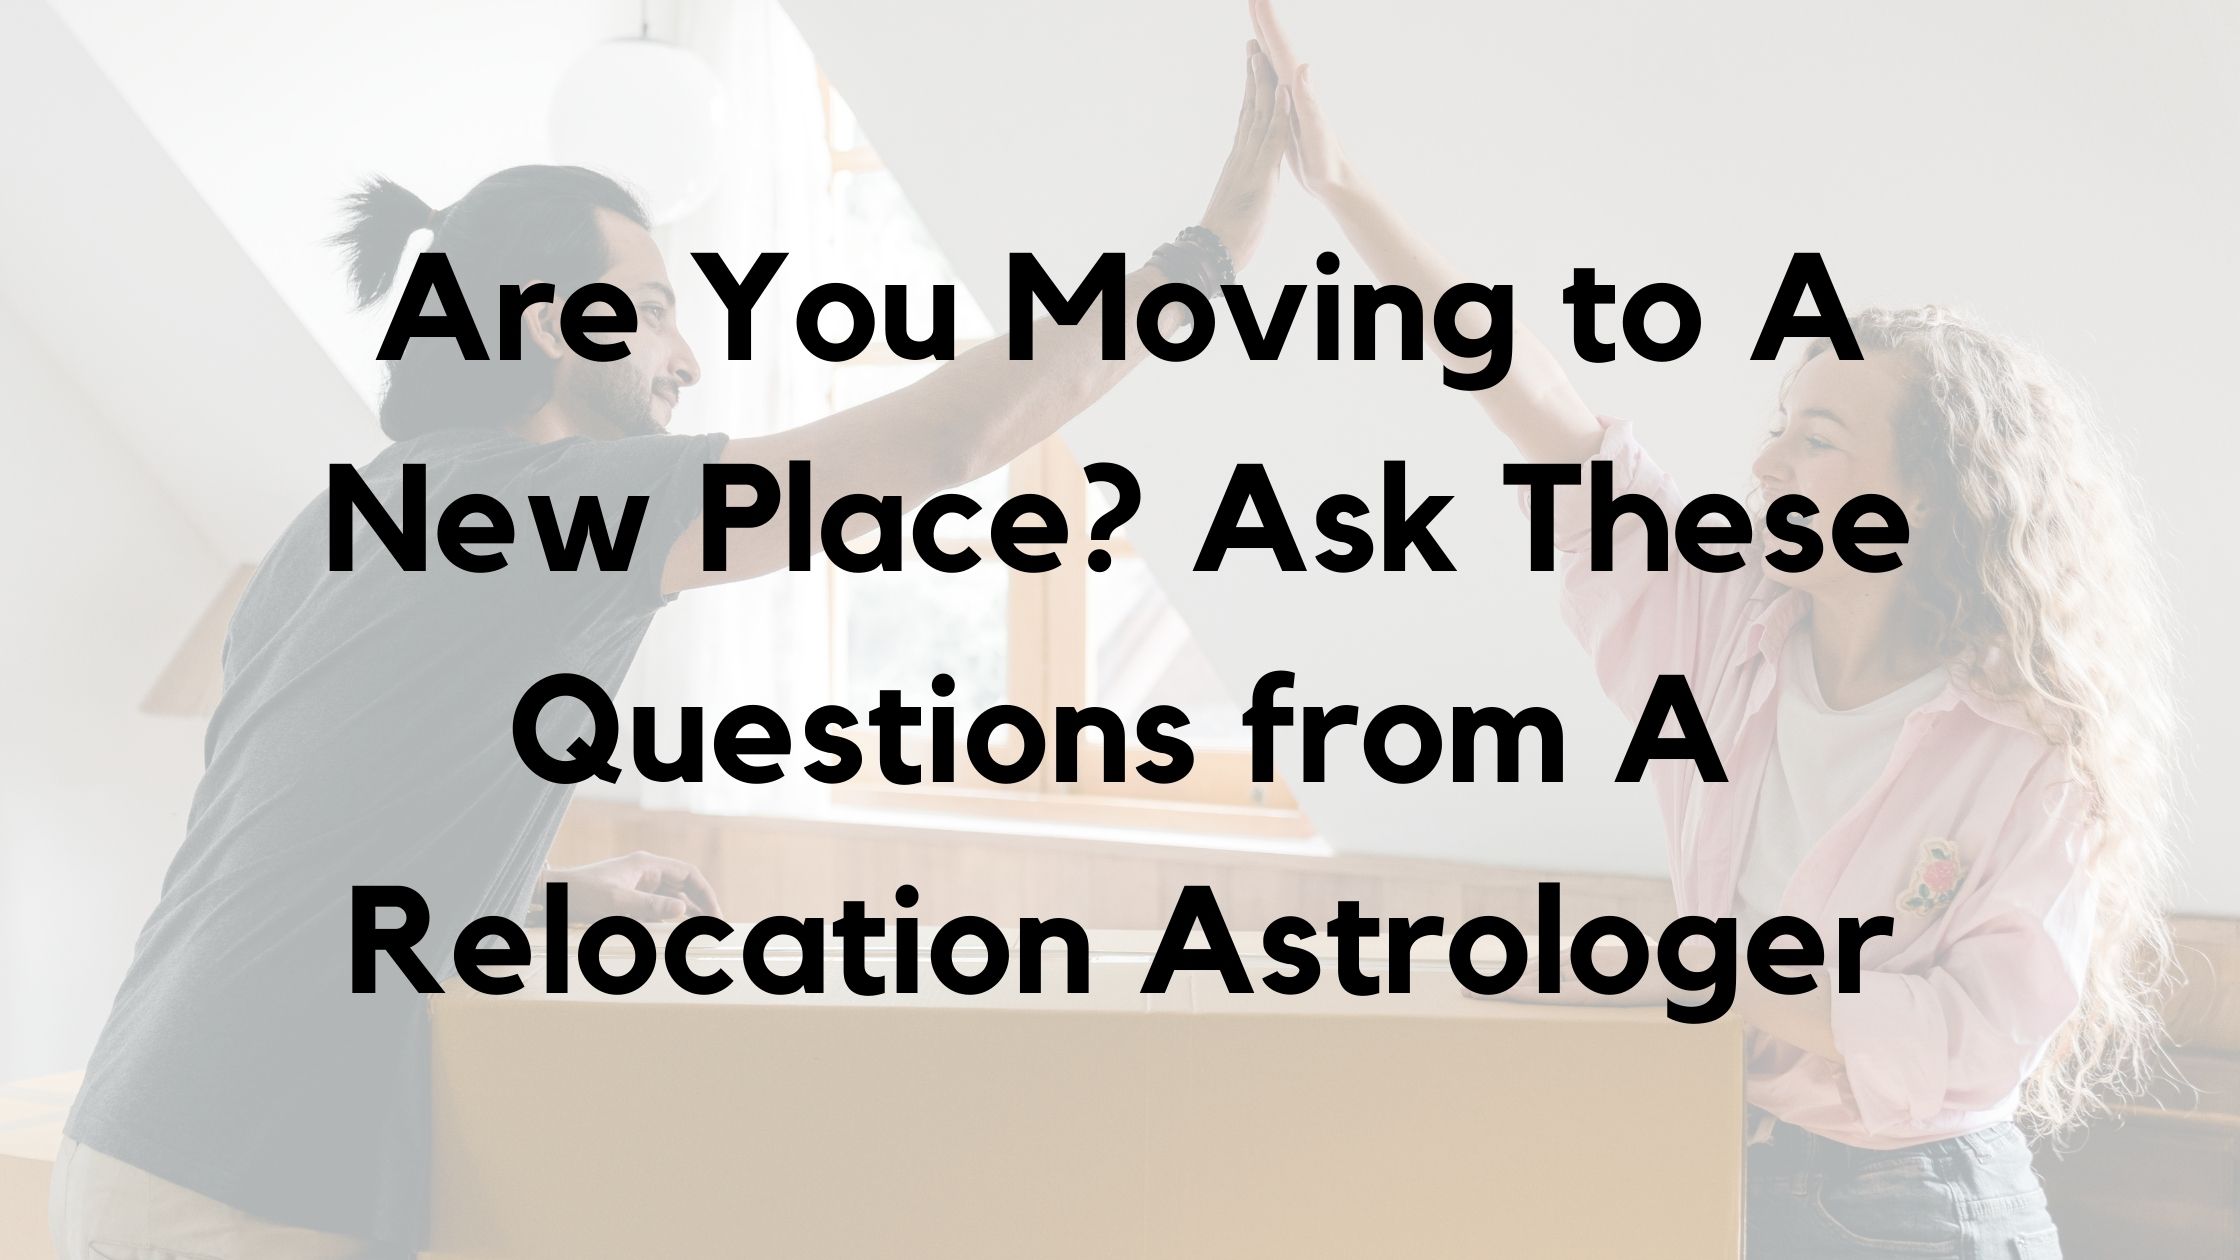 Relocation Astrologer